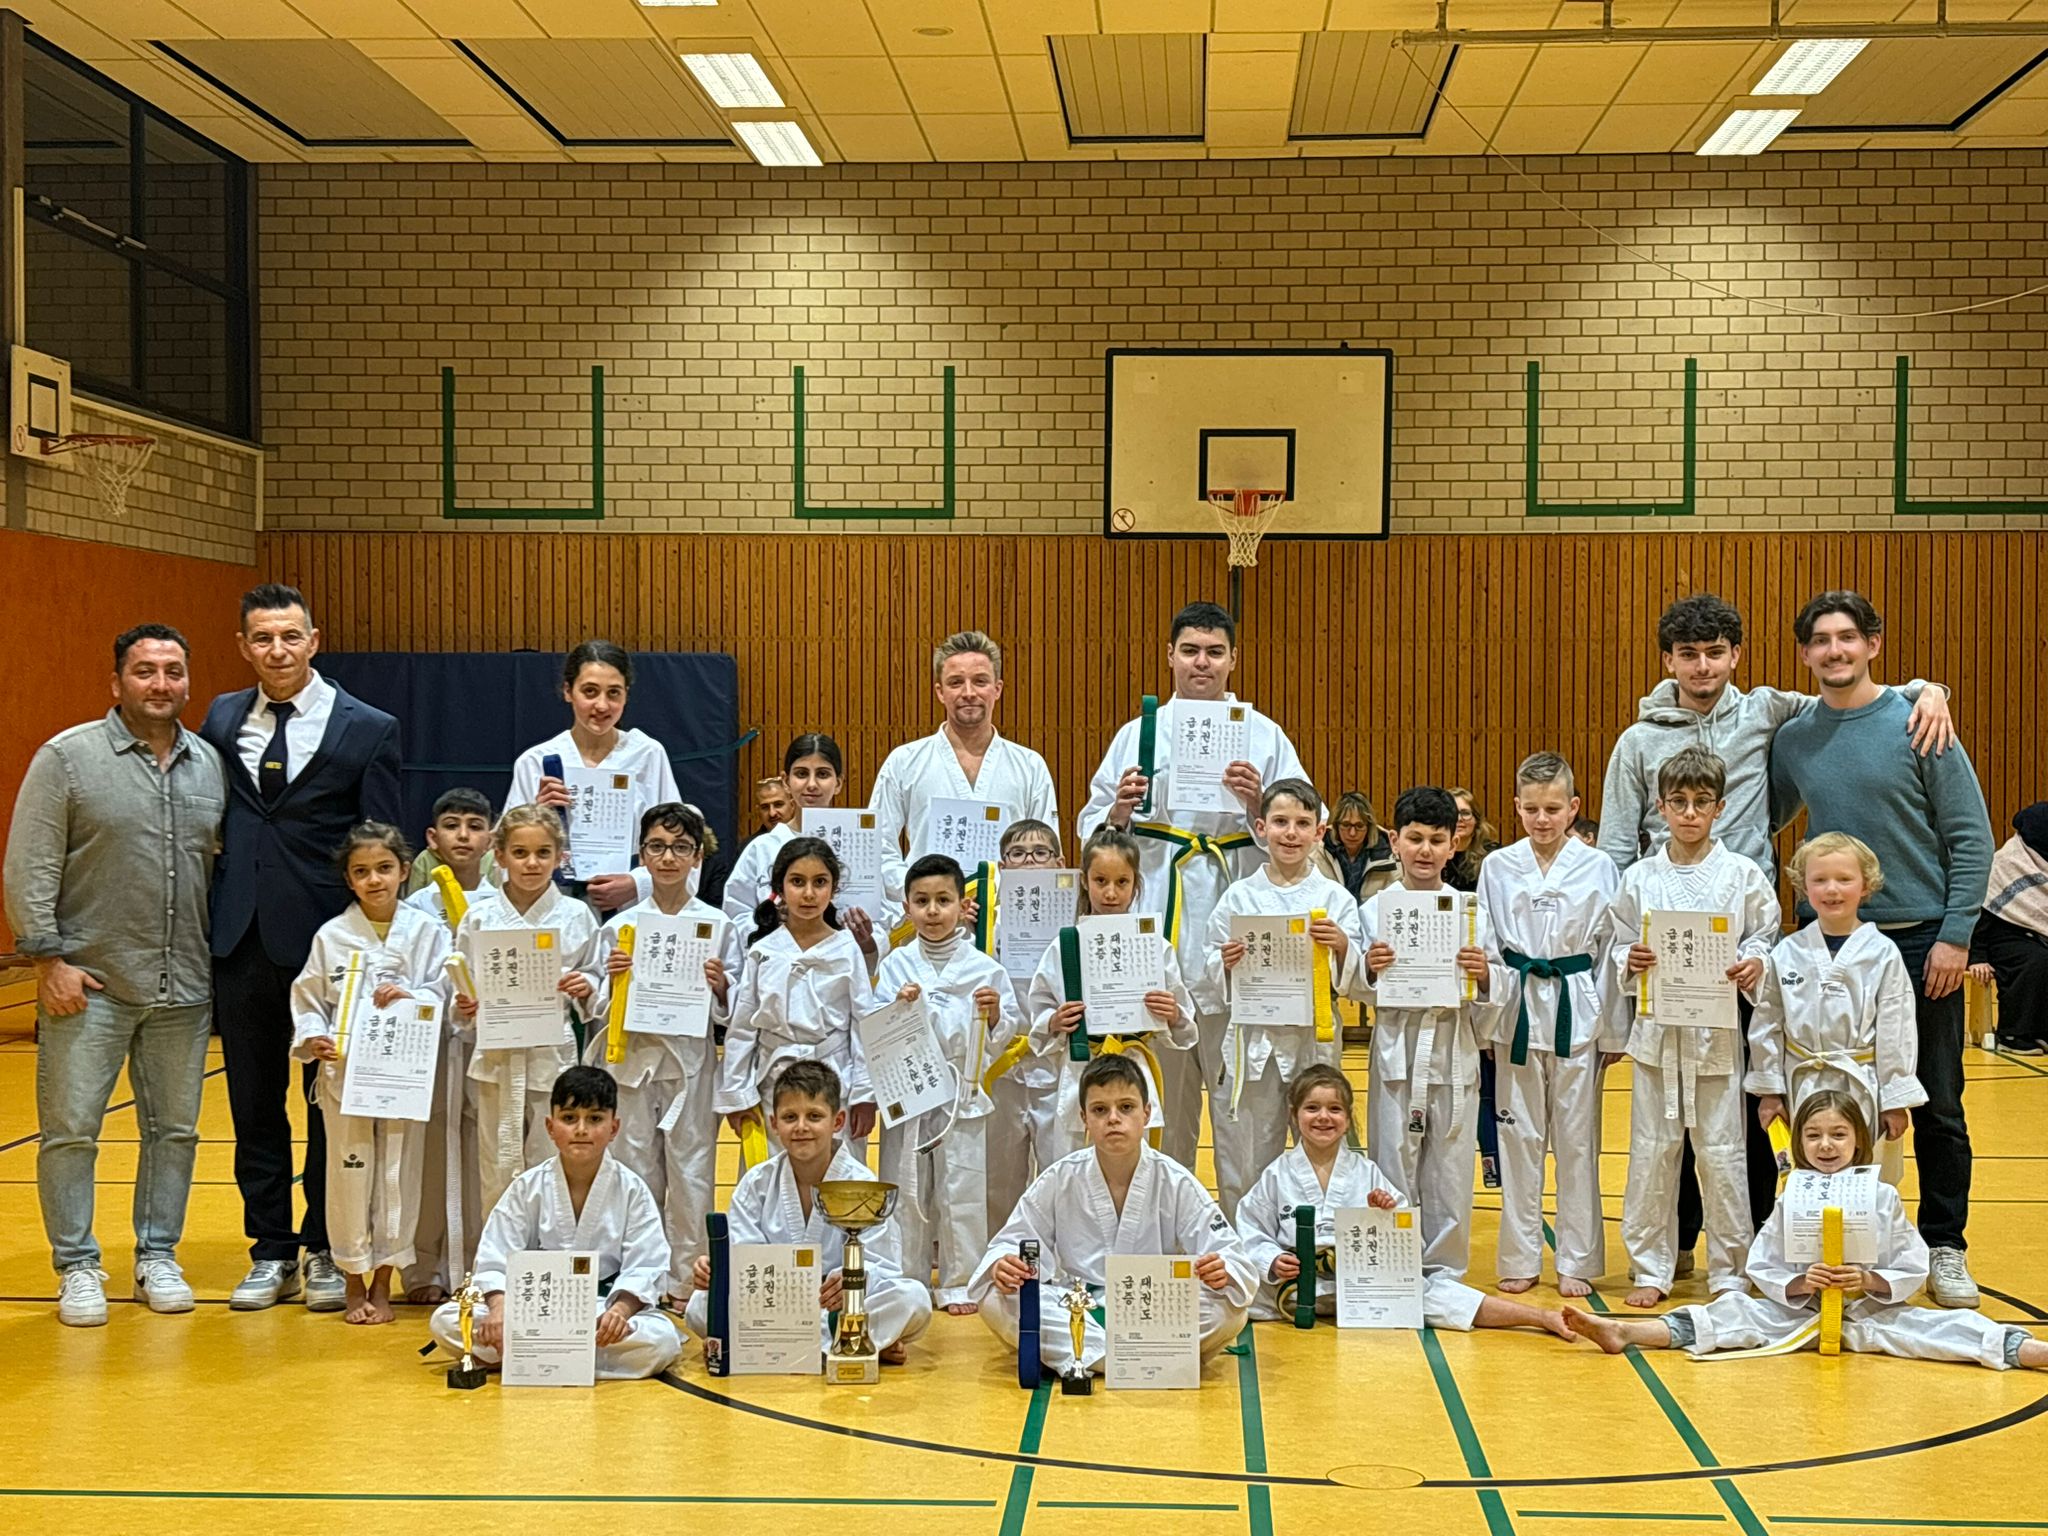 Gürtelprüfung  -Taekwondo Sportschule Cinar e. V.